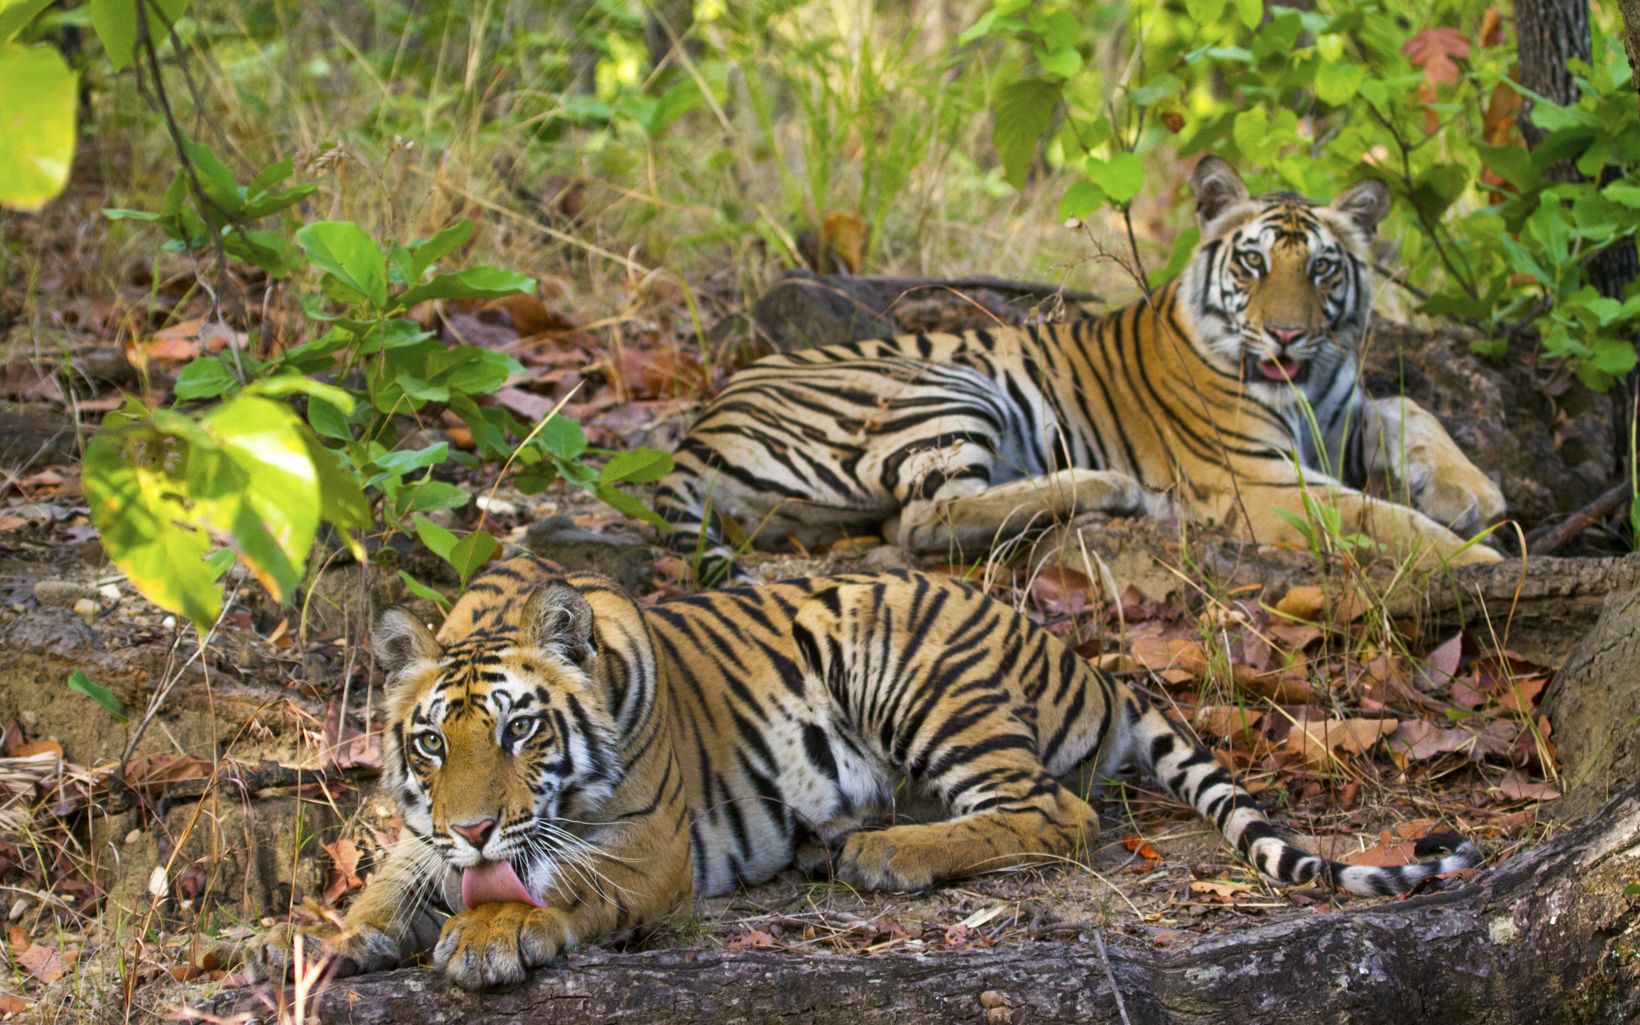 Sub Adult Bengal Tiger cubs in Bandhavgarh National Park, India